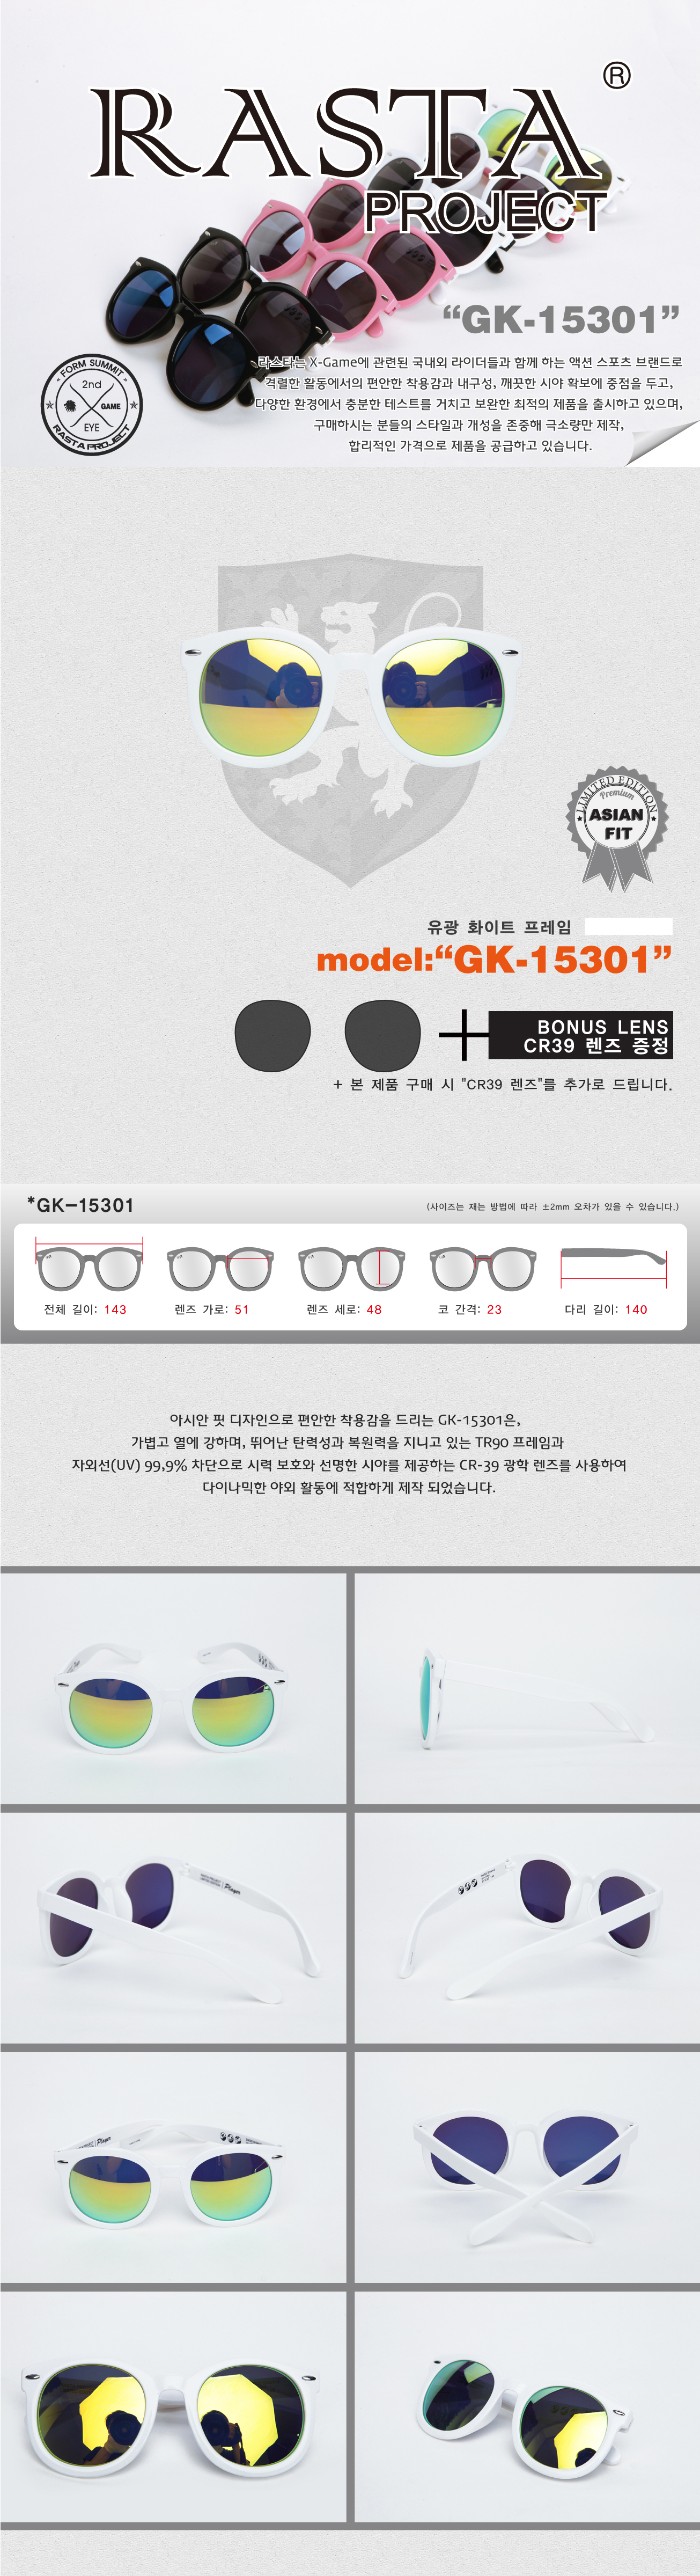 GK-15301 Gloss White